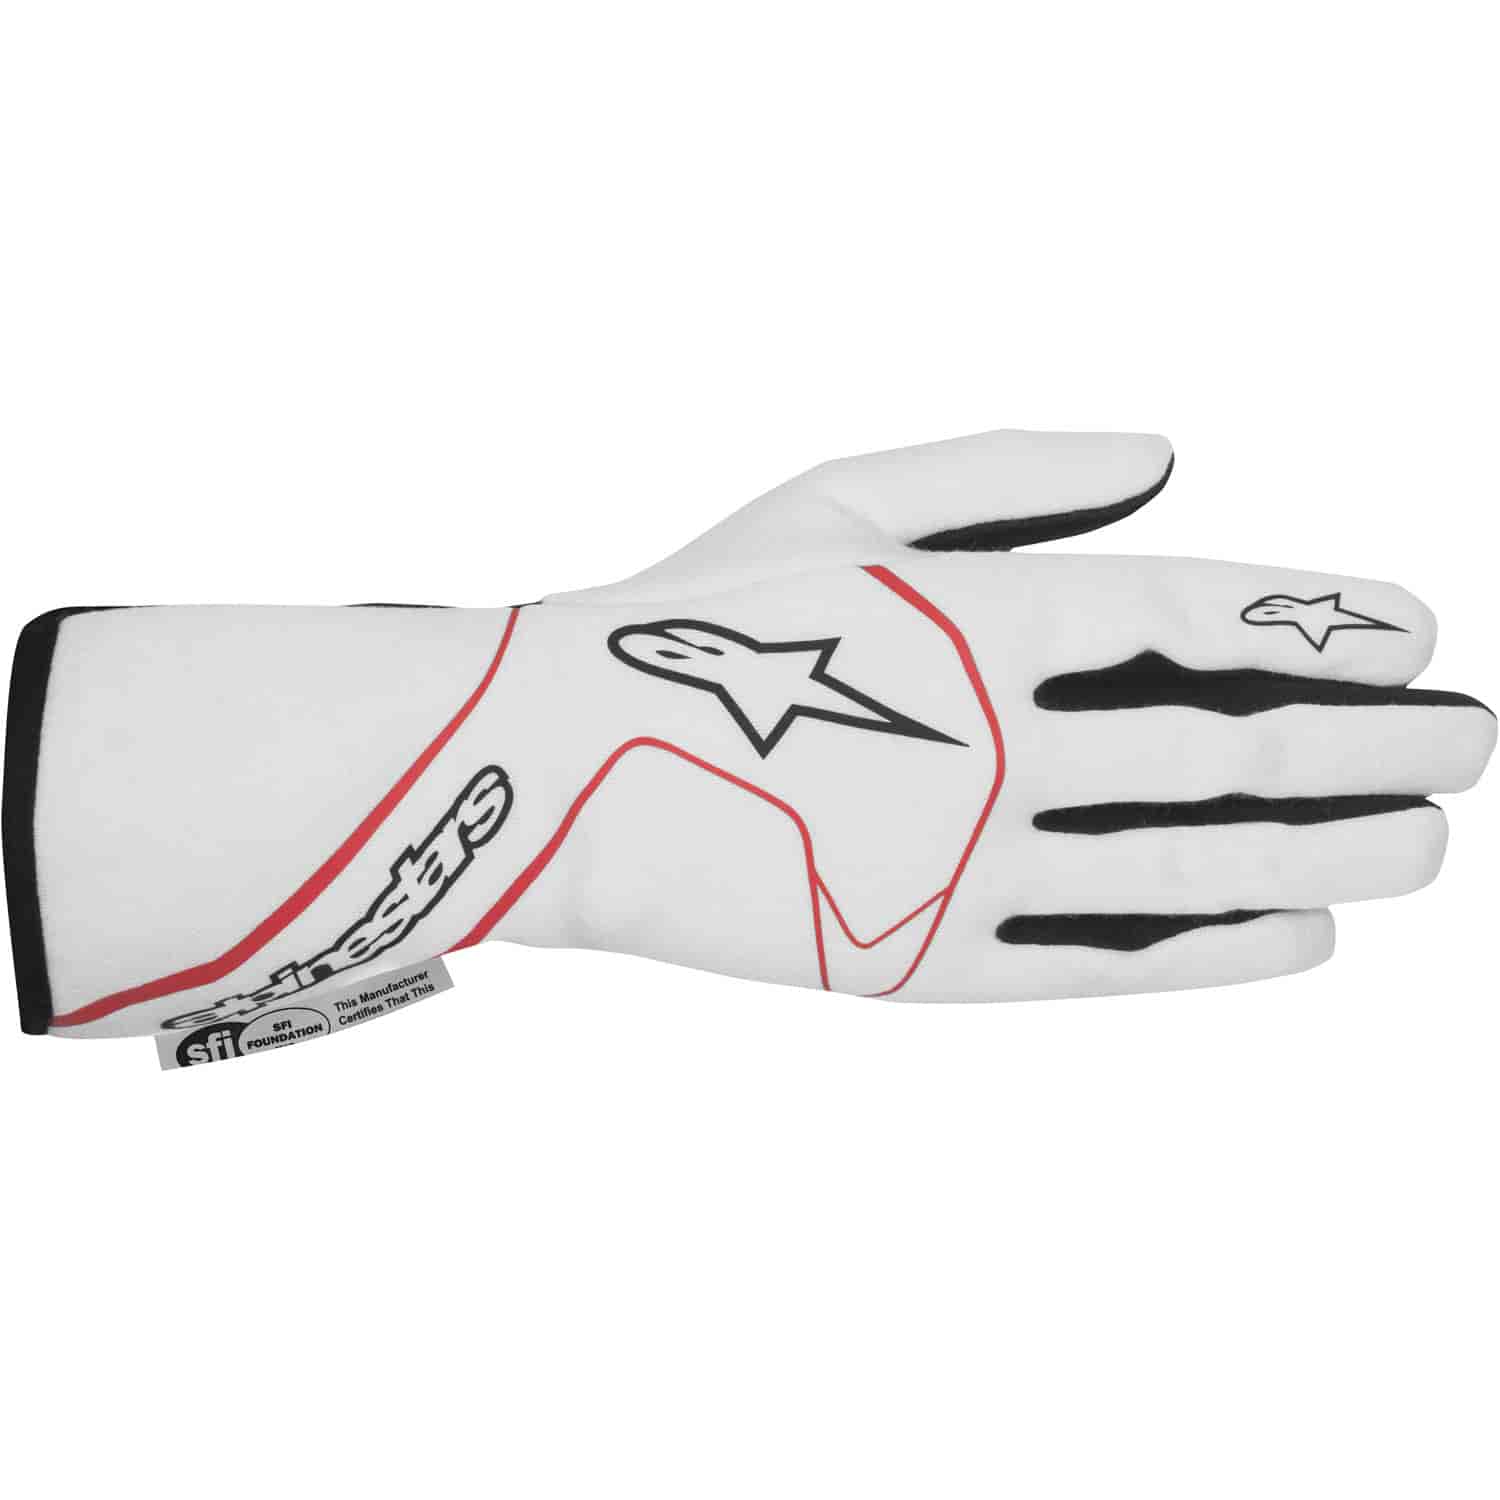 Tech 1 Race Gloves White/Red/Black SFI 3.3/5